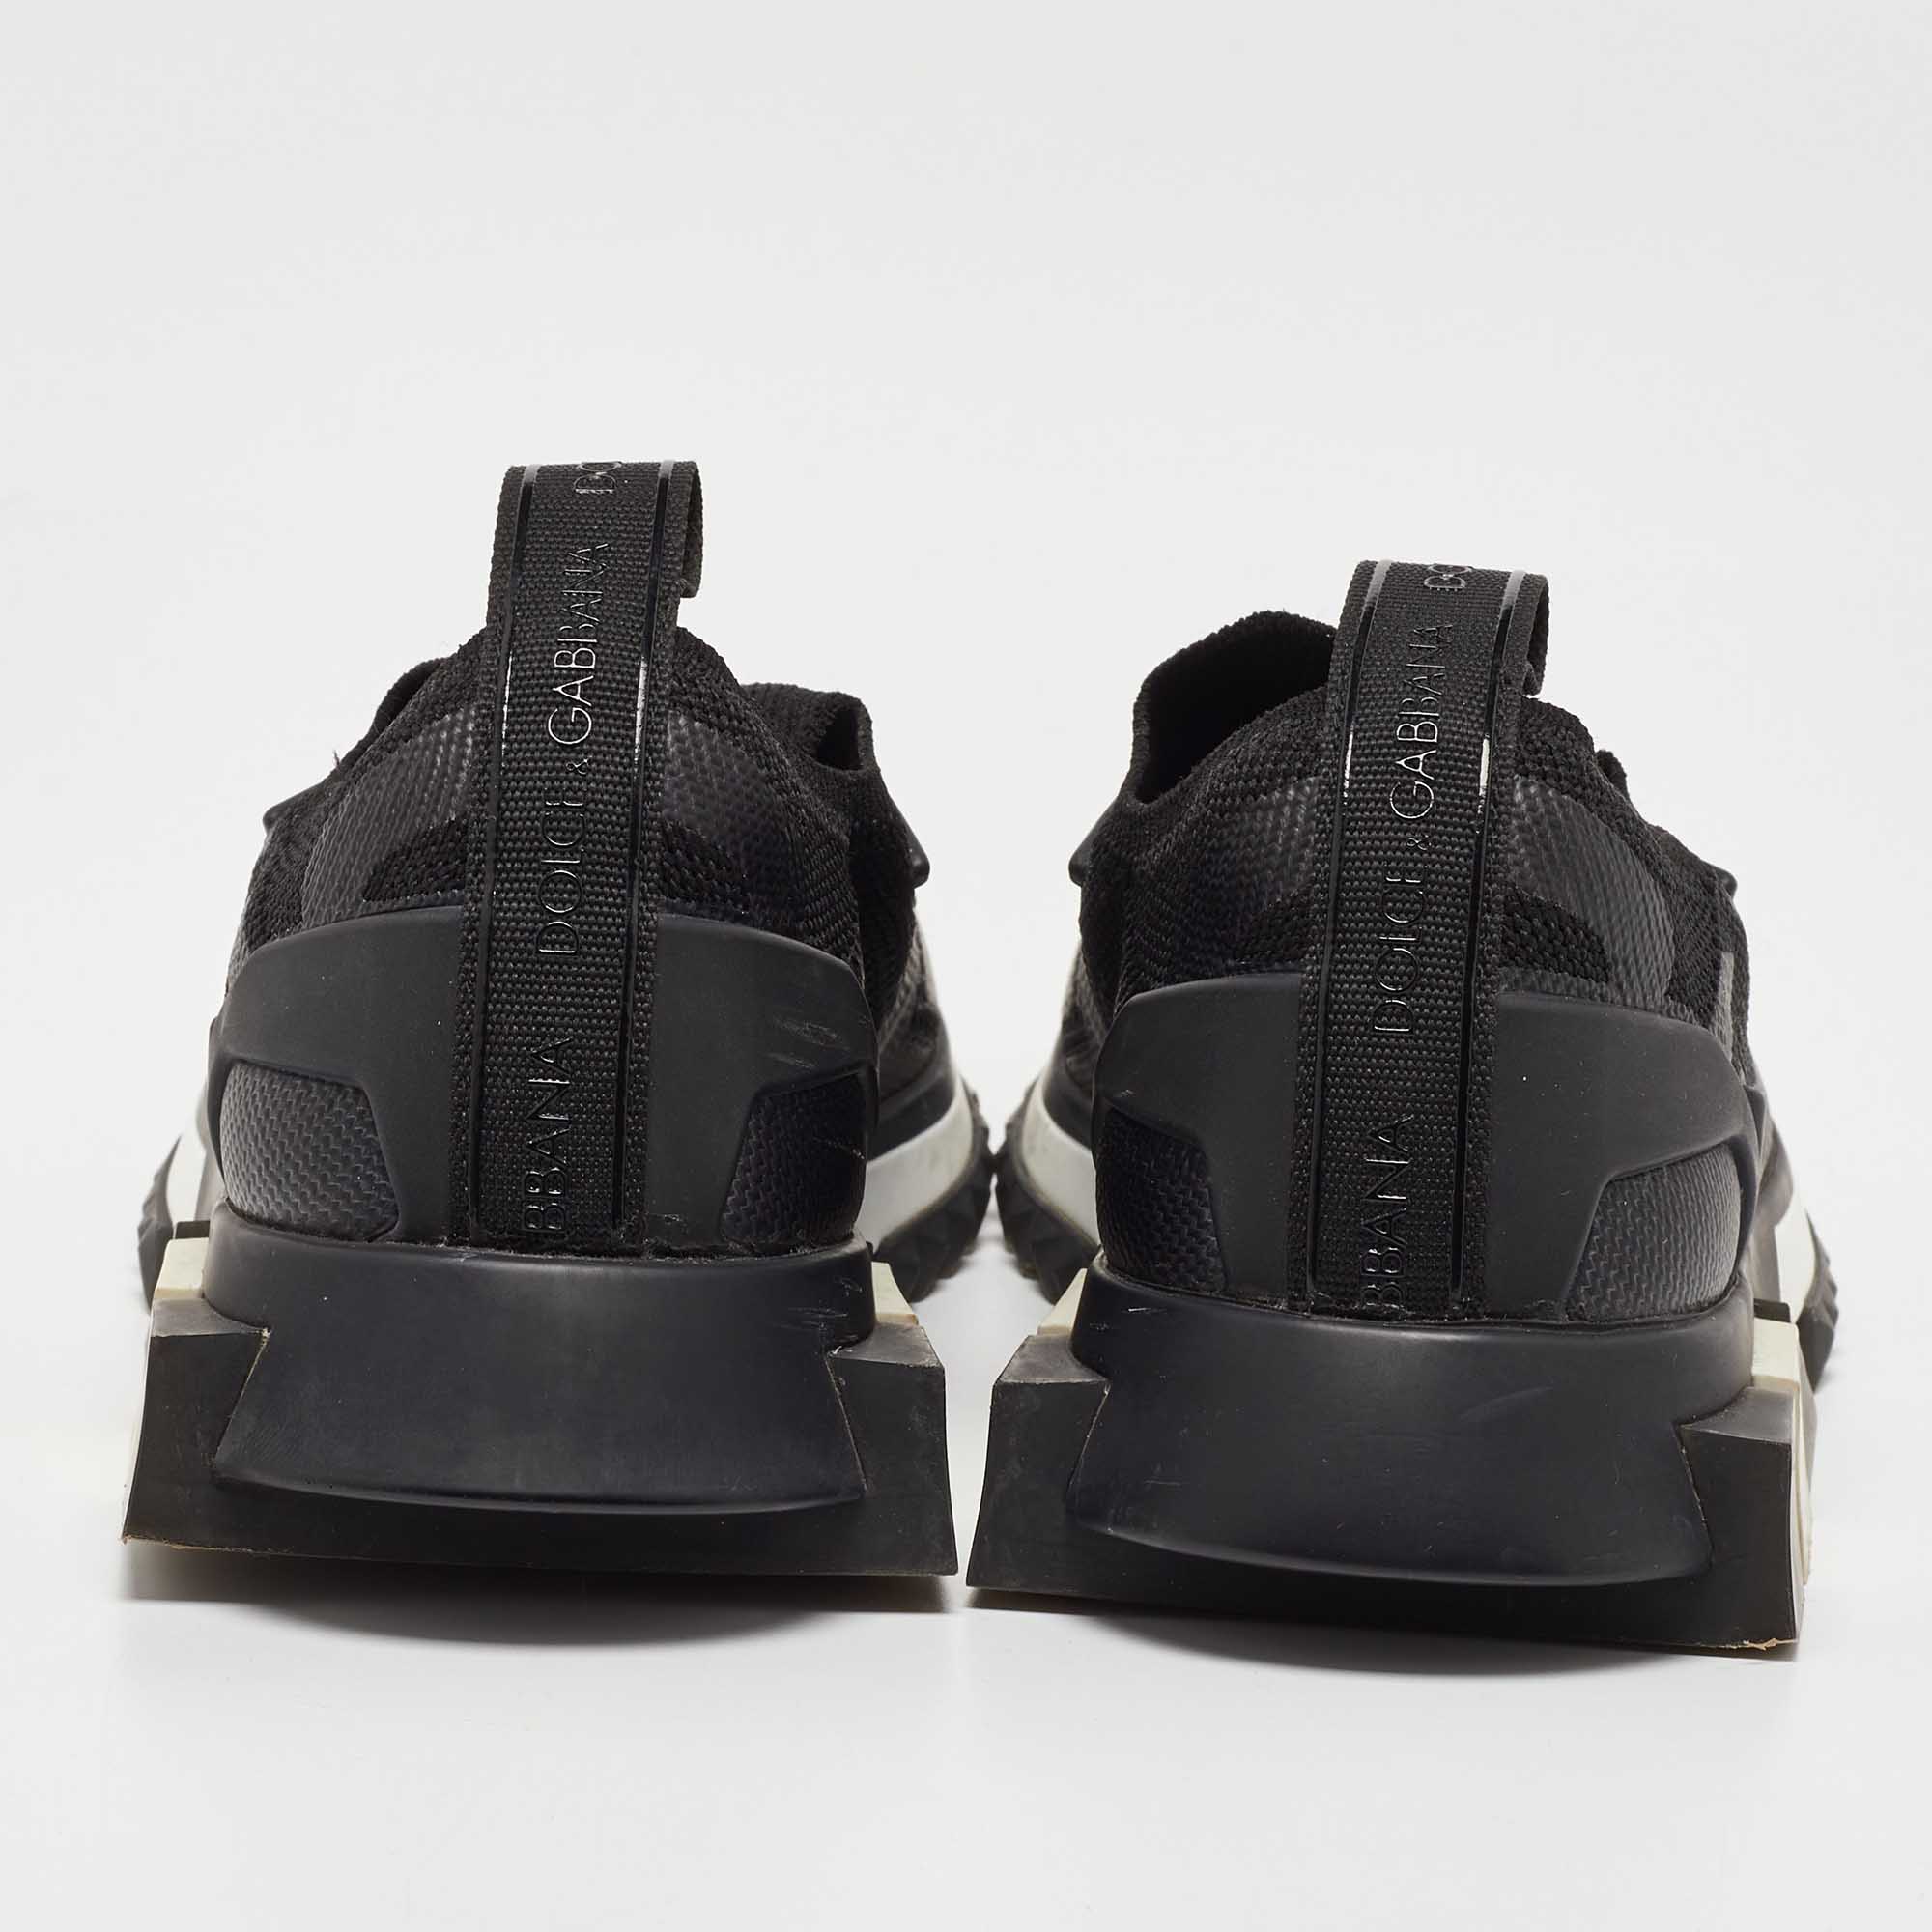 Dolce & Gabbana Black Knit Fabric Sorrento Slip On Sneakers Size 35